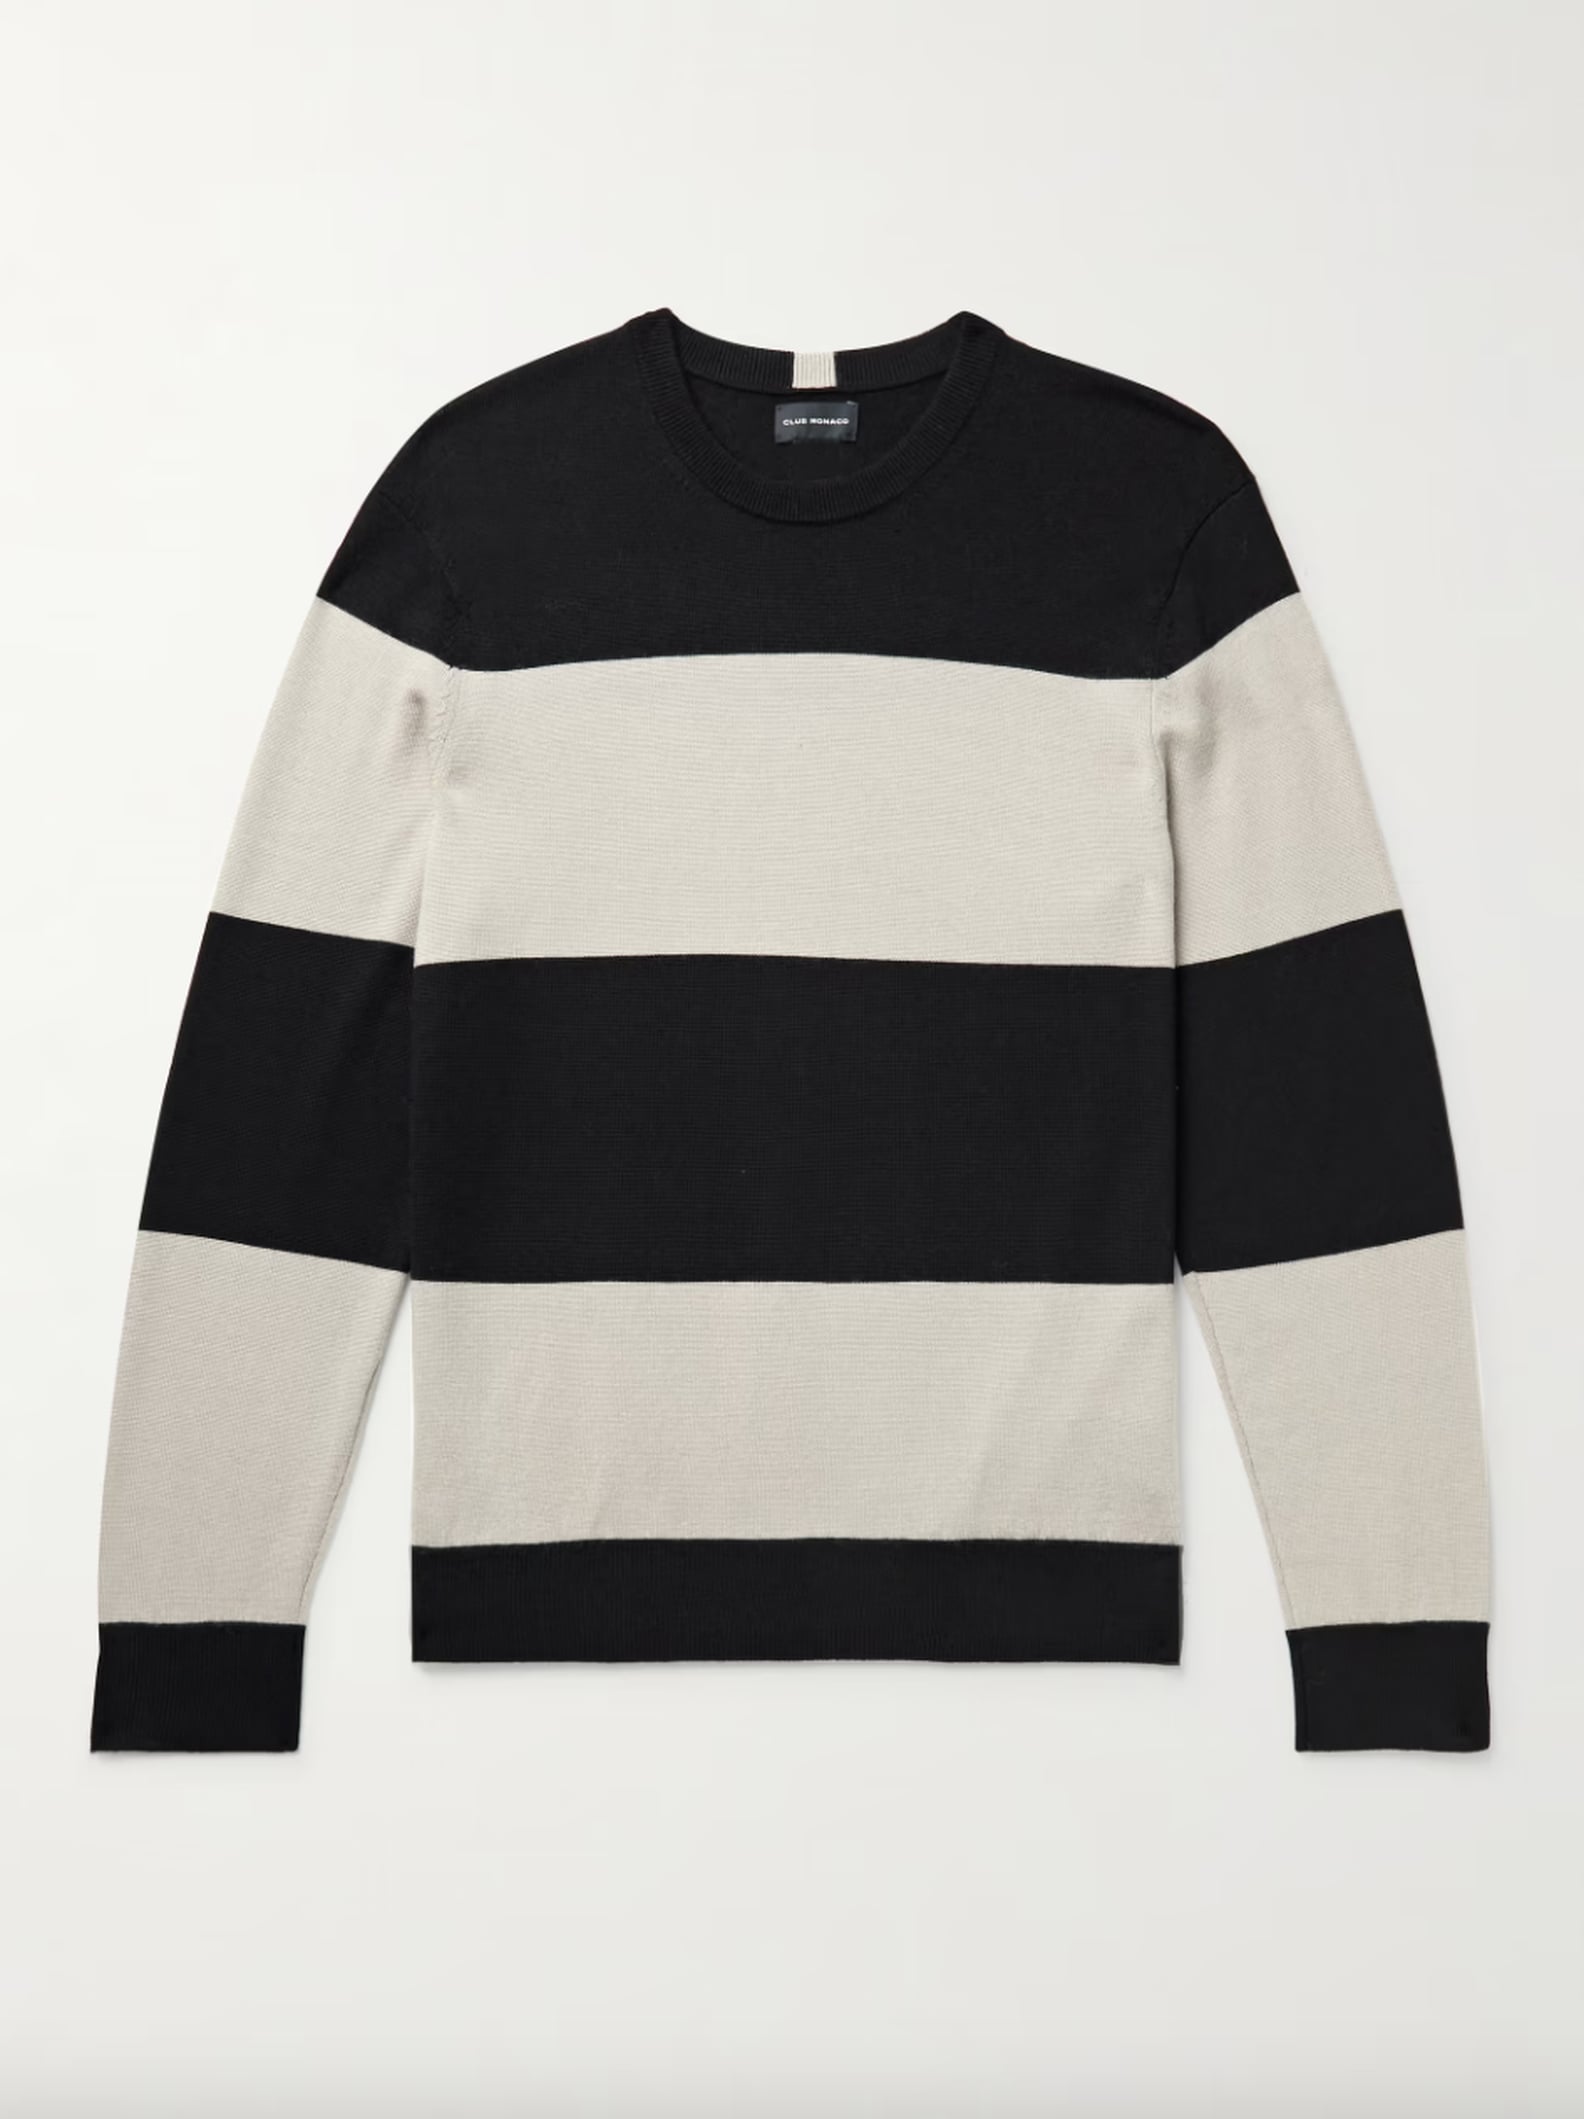 All of David Rose's Best Sweaters on Schitt's Creek | POPSUGAR Fashion